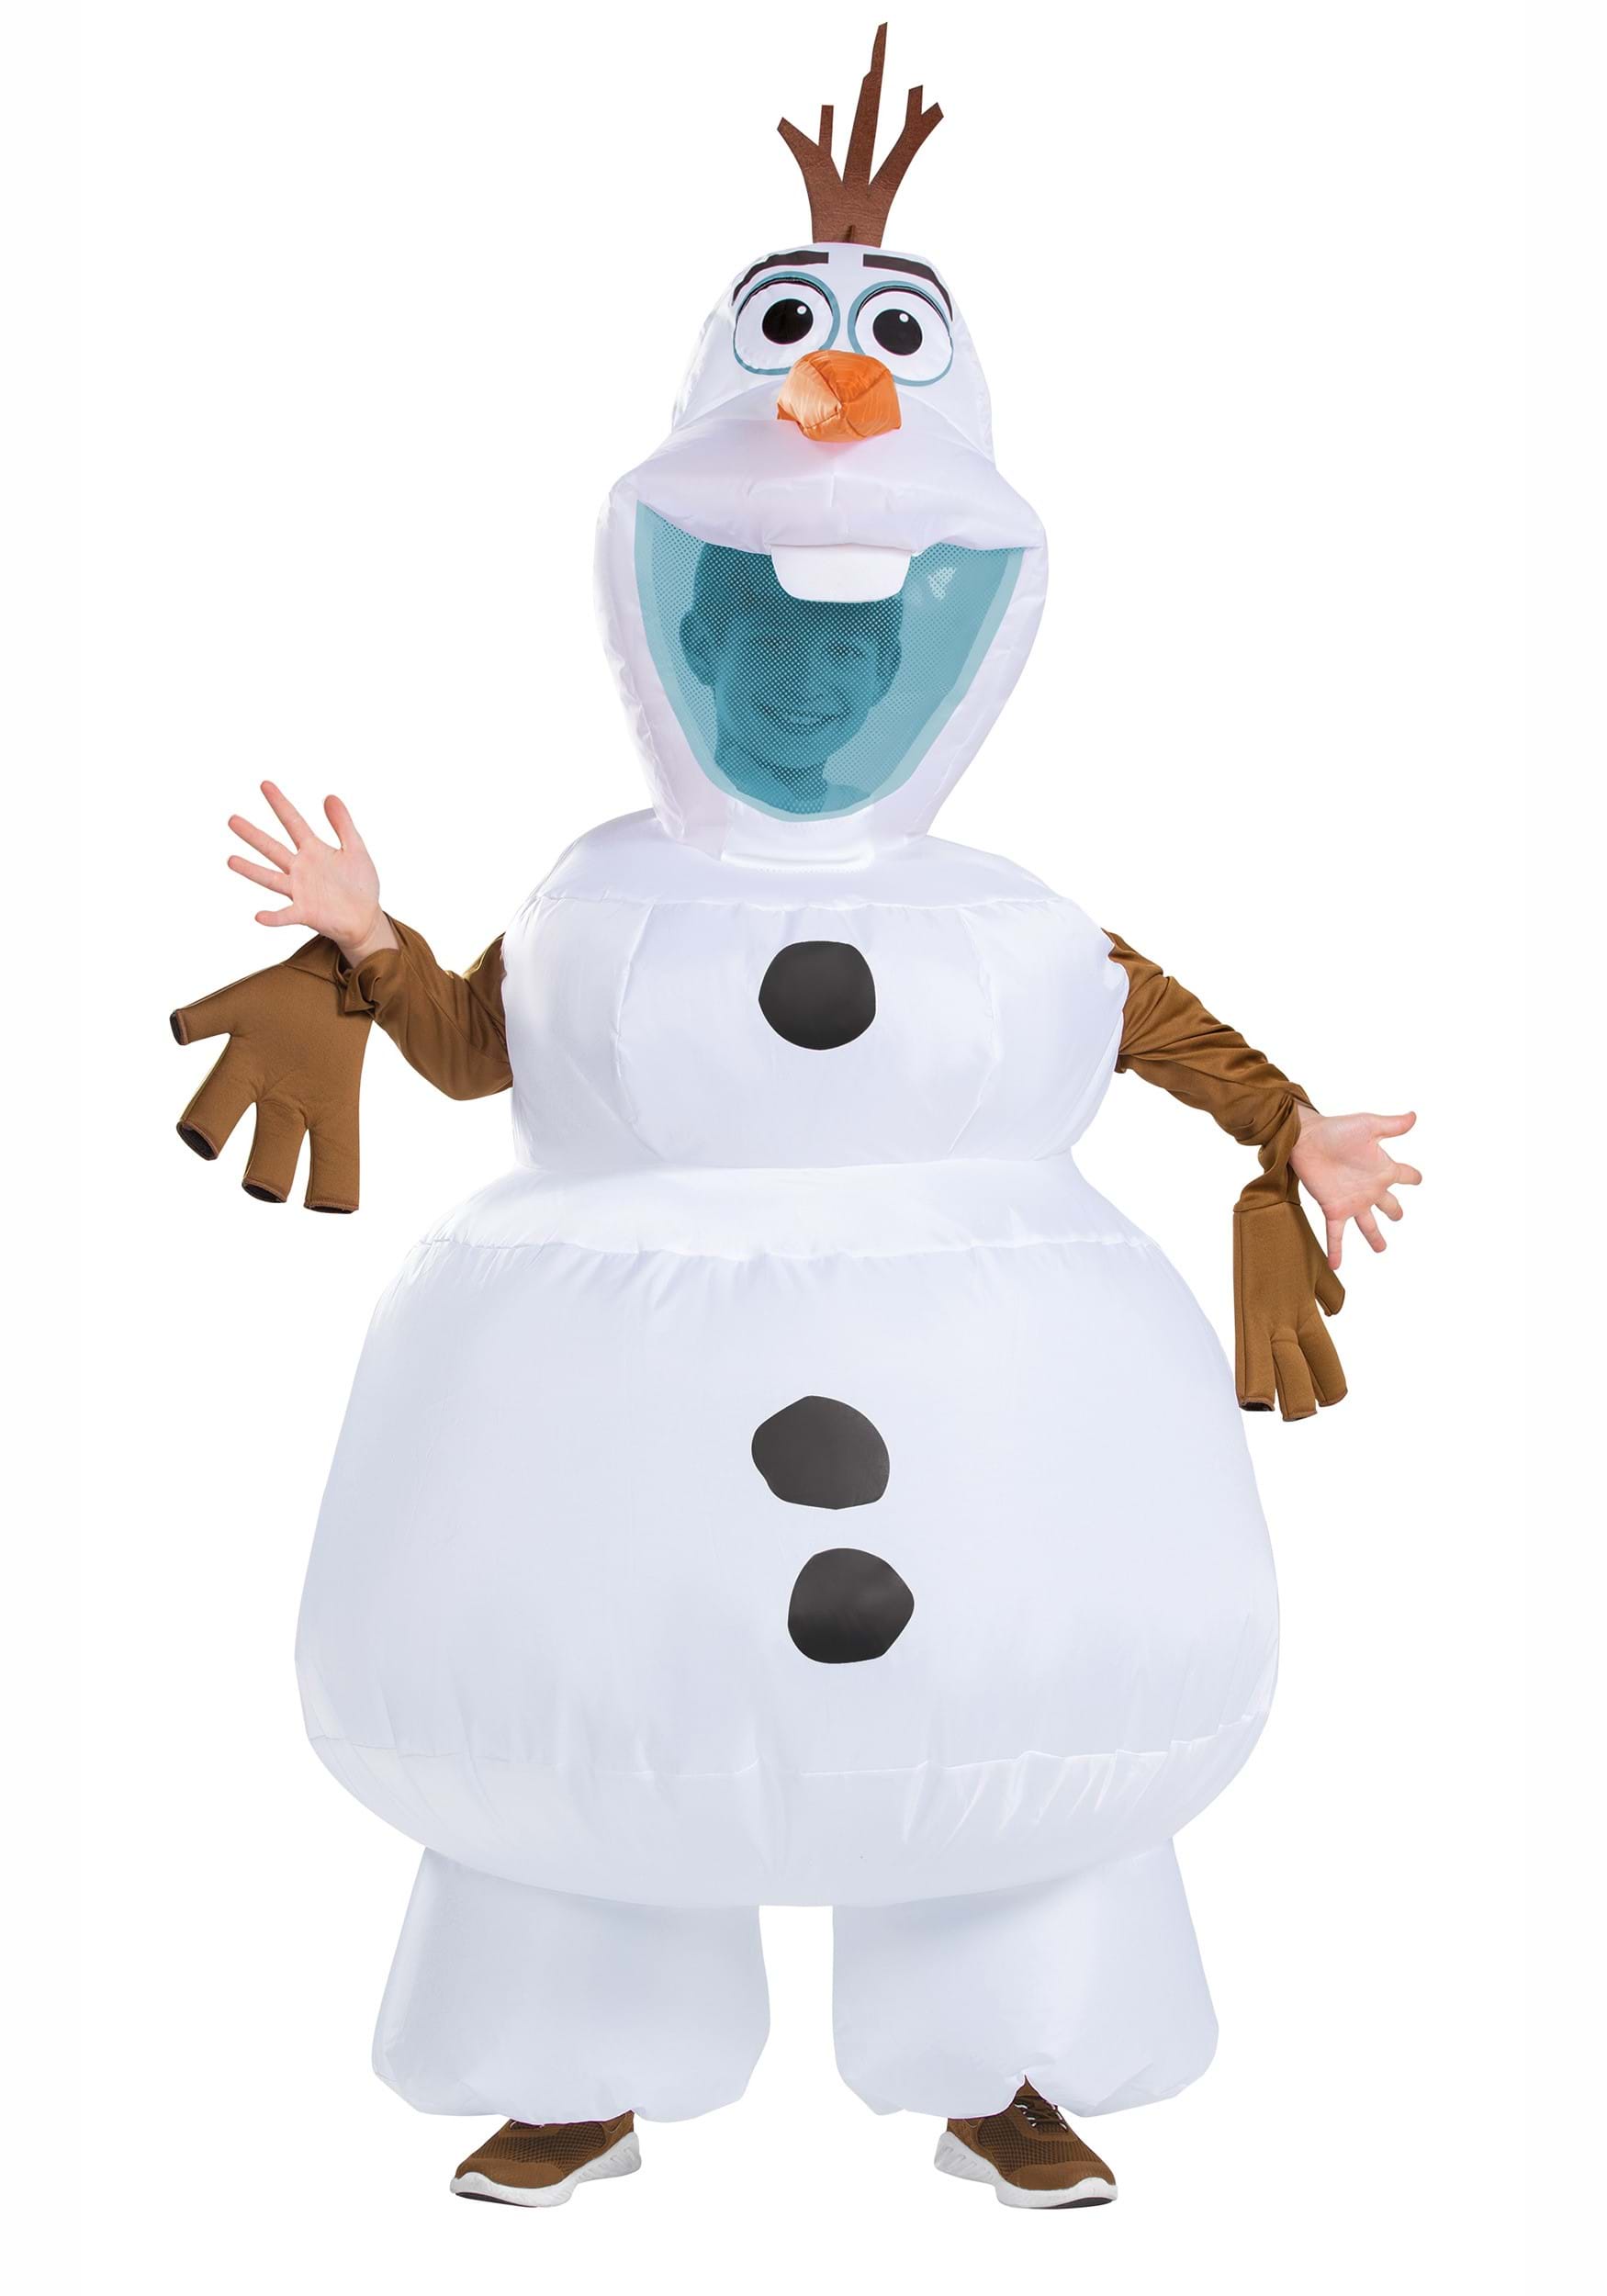 Kids Disney's Frozen Olaf Inflatable Costume